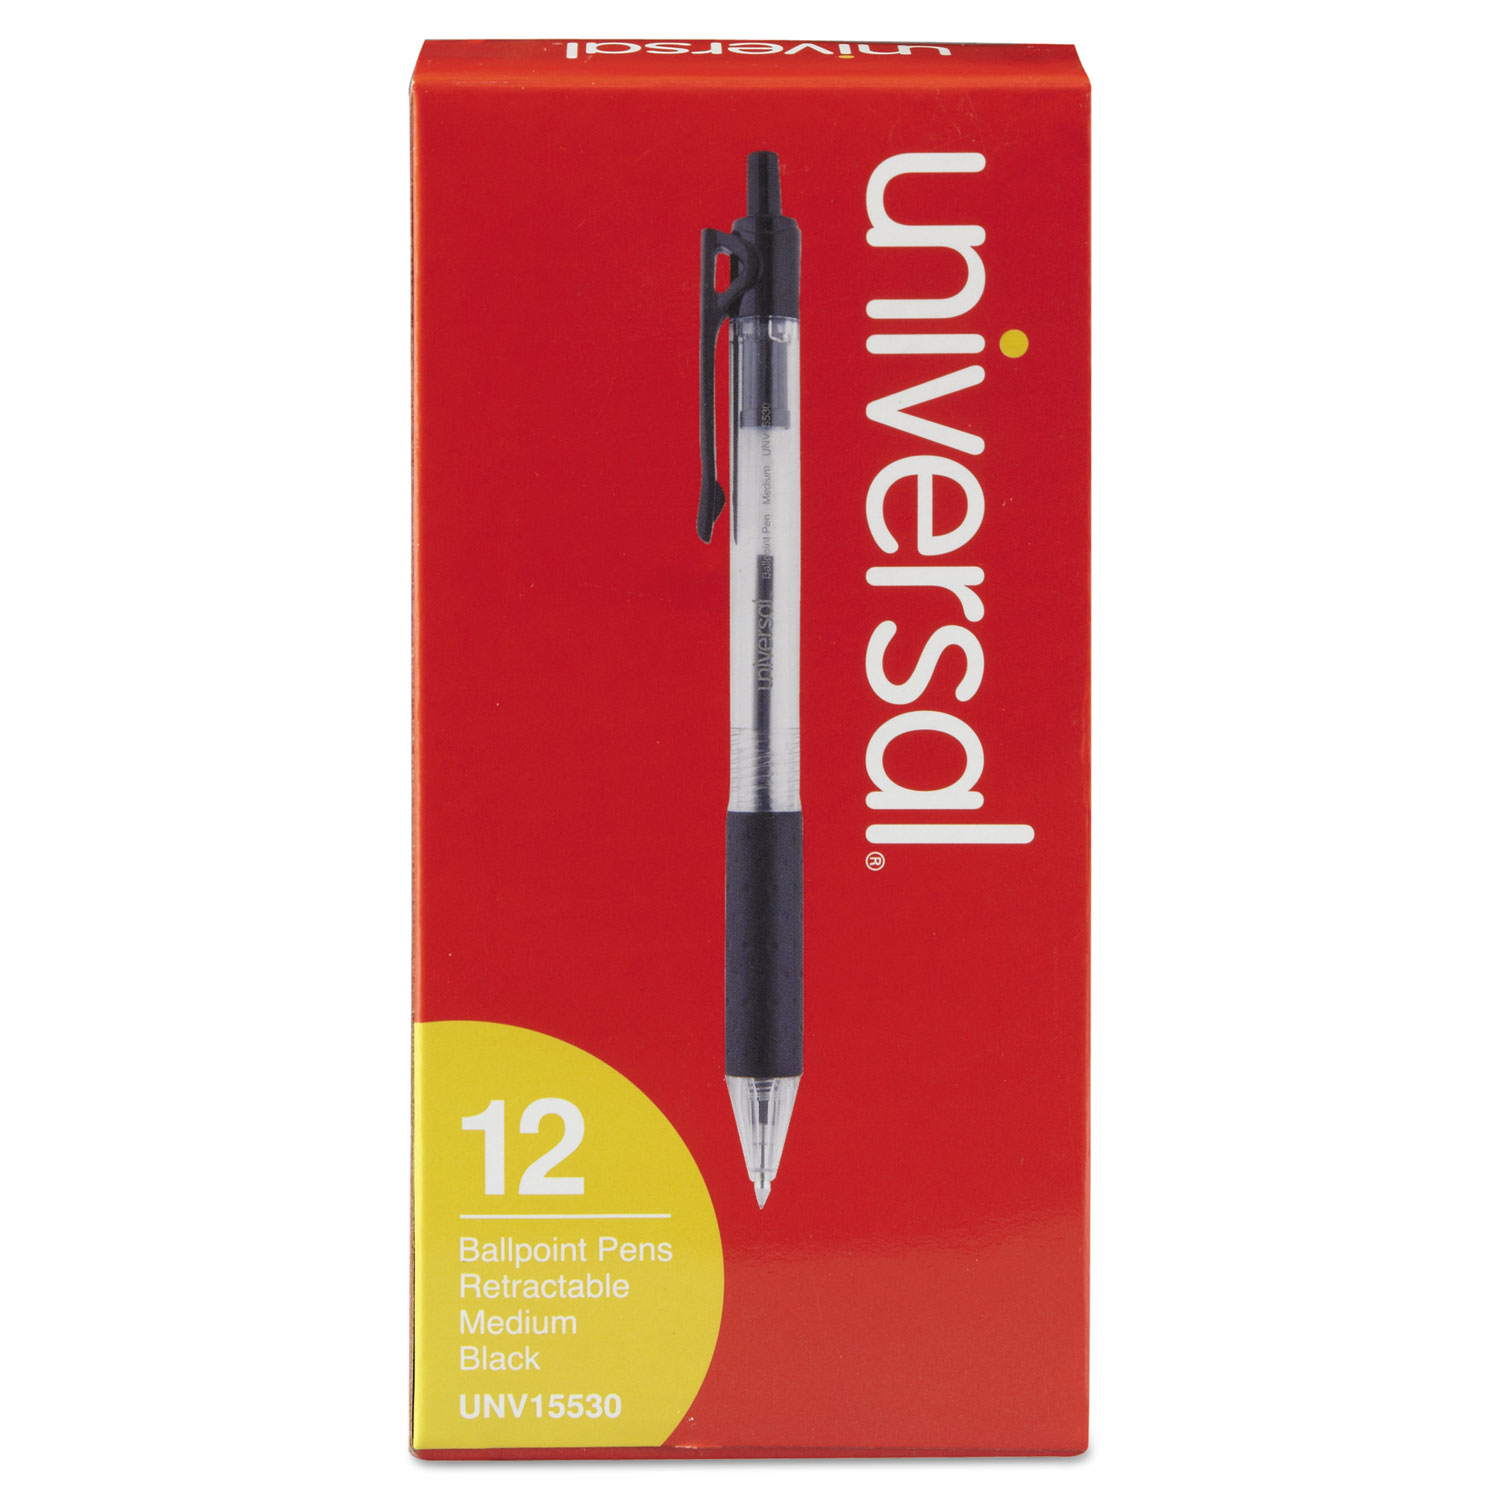 Pen universal